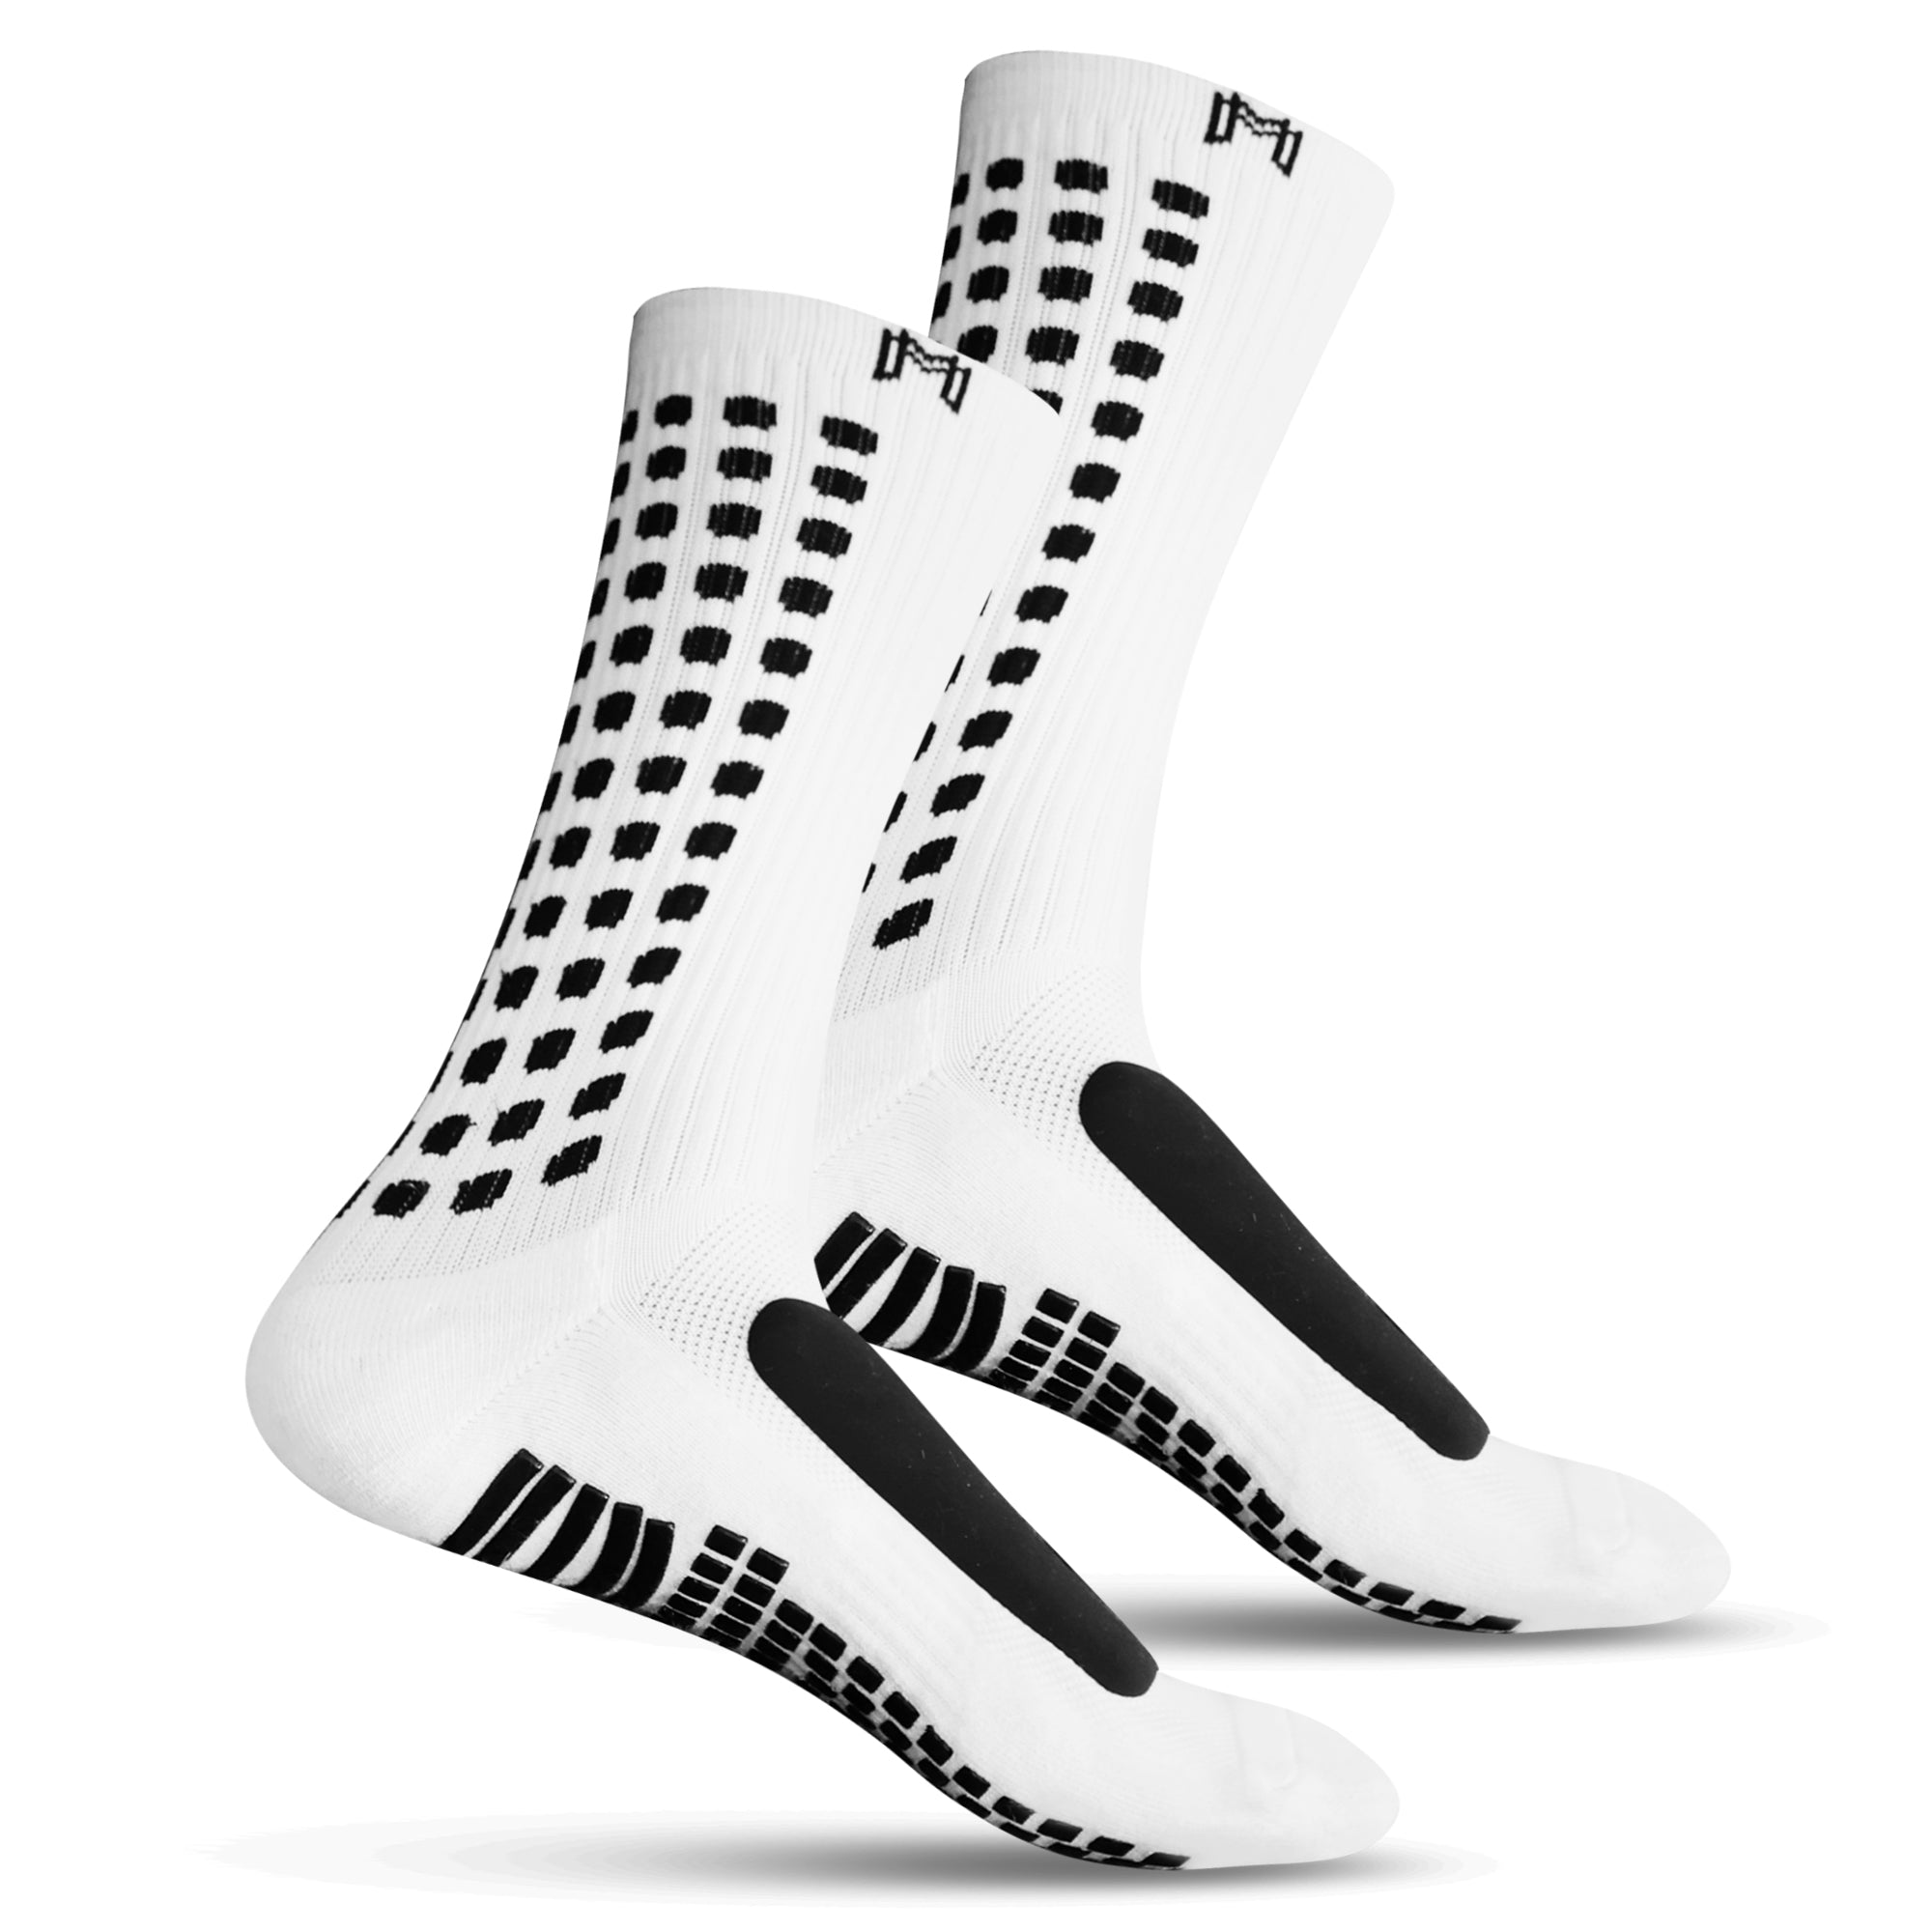 MEDUCA GOAT Grip Socks – MEDUCA  Football, Freestyle & Street Soccer Gear